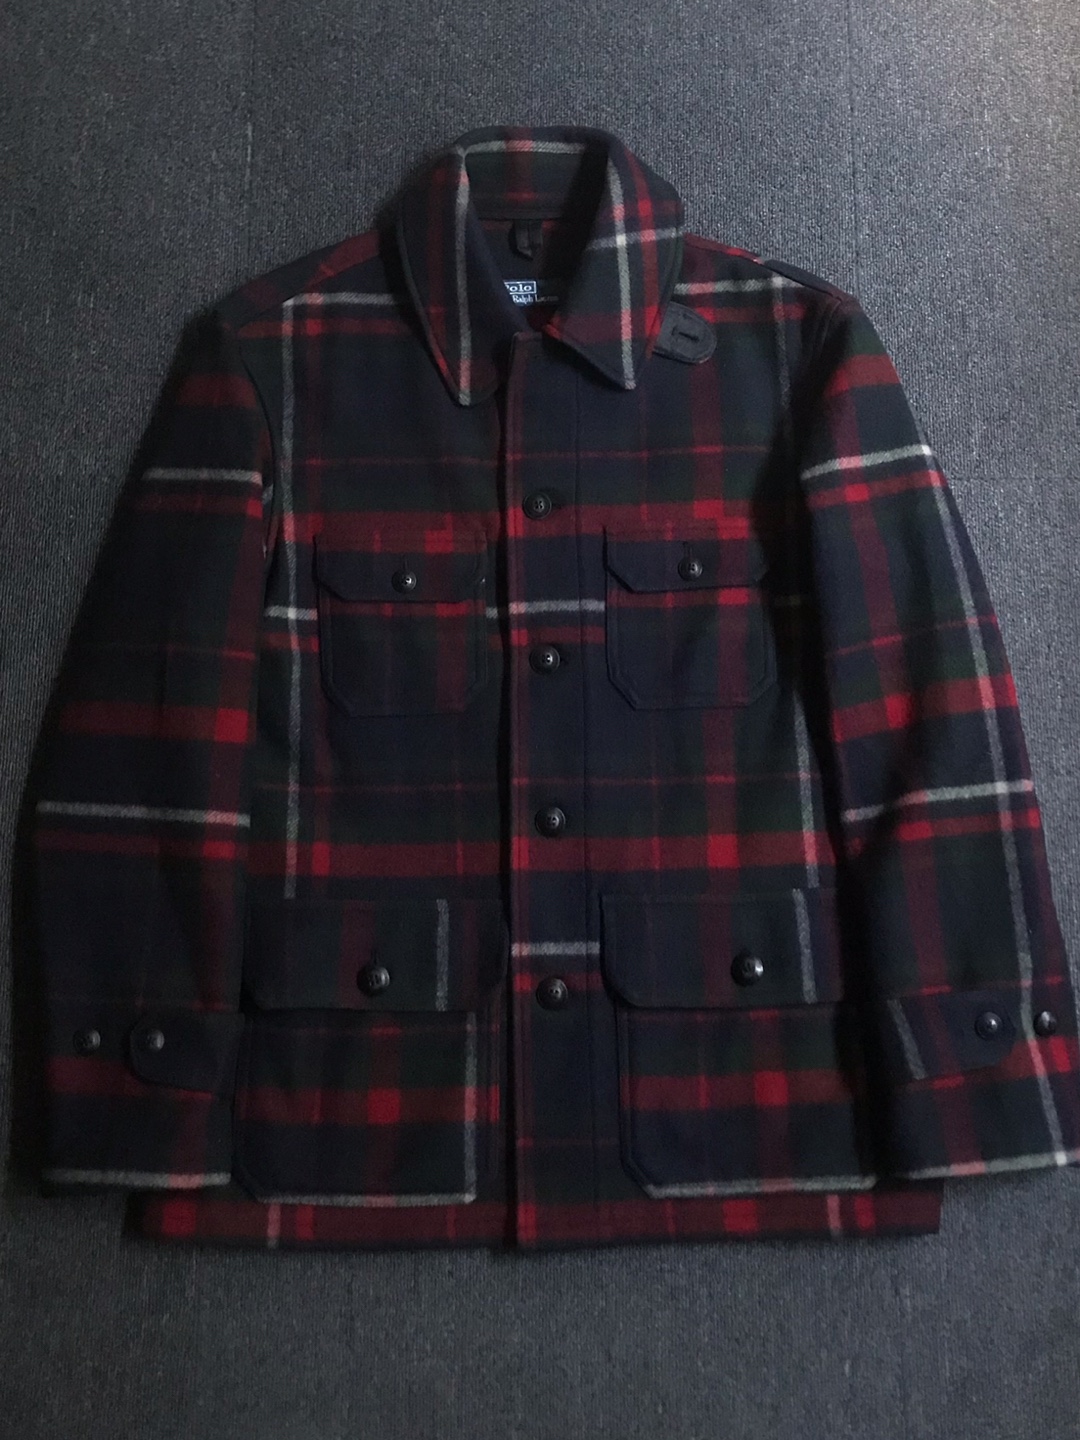 Polo RL wool plaid field jacket (L size, ~105 추천)